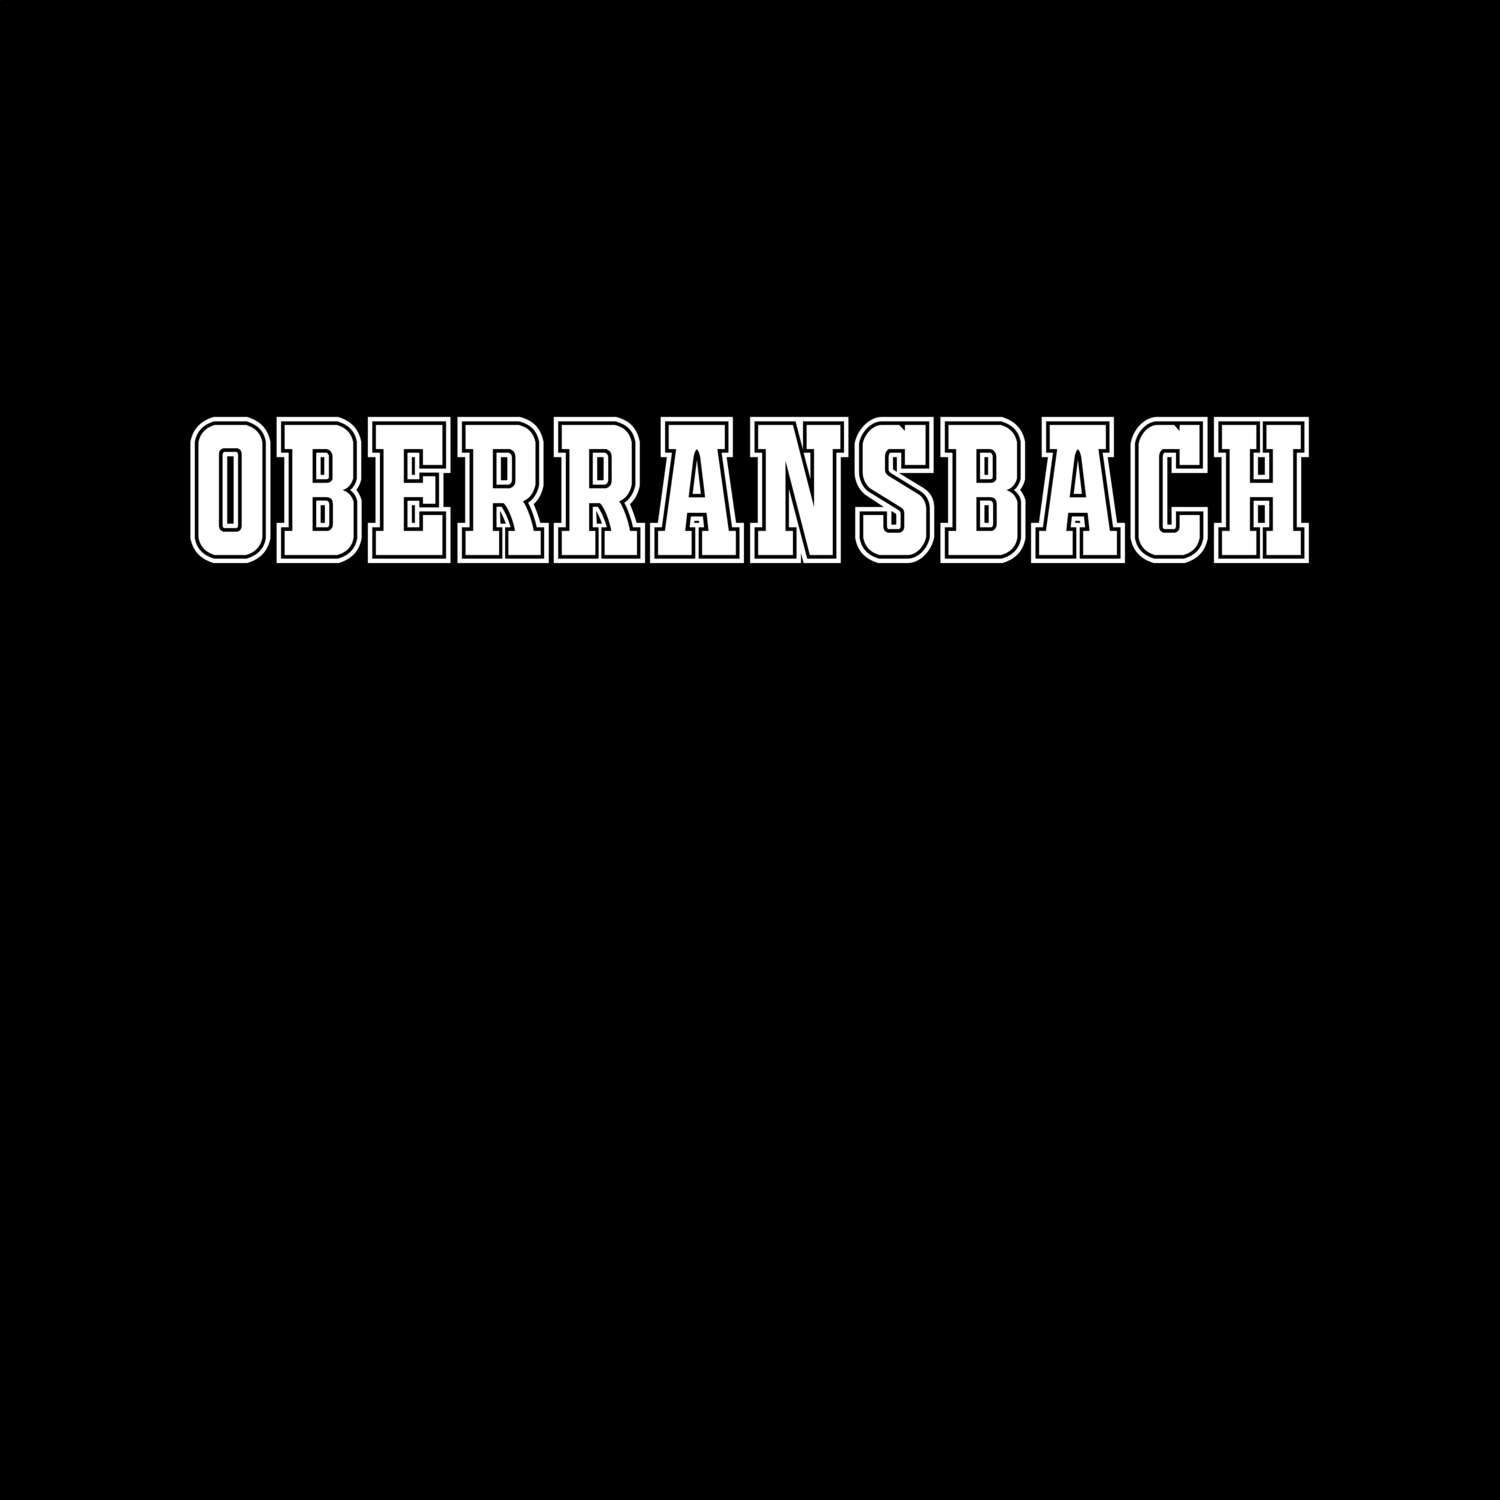 Oberransbach T-Shirt »Classic«